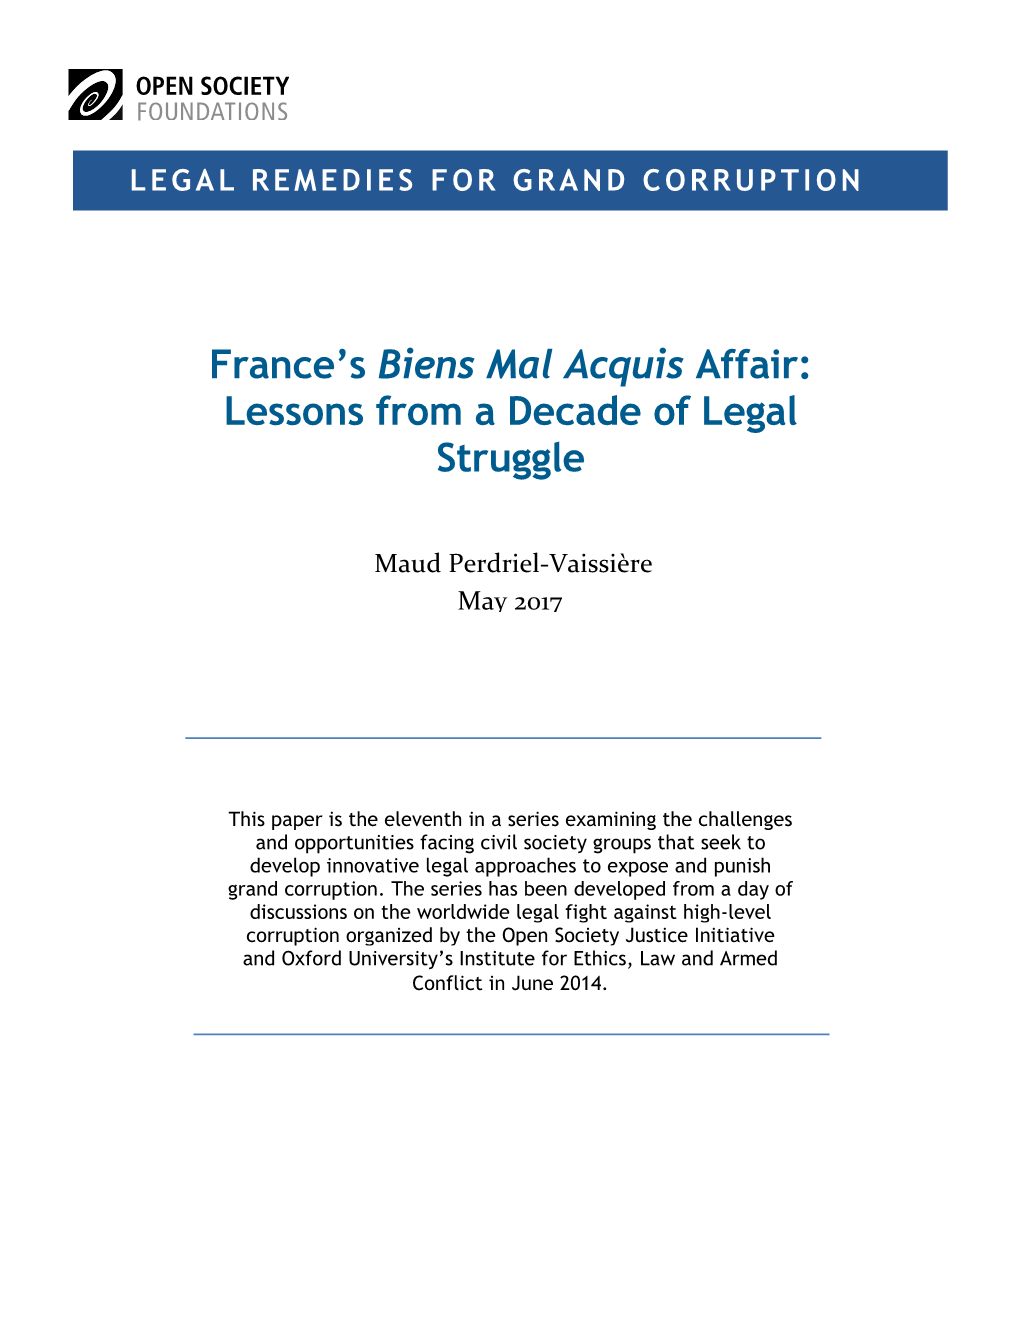 France's Biens Mal Acquis Affair